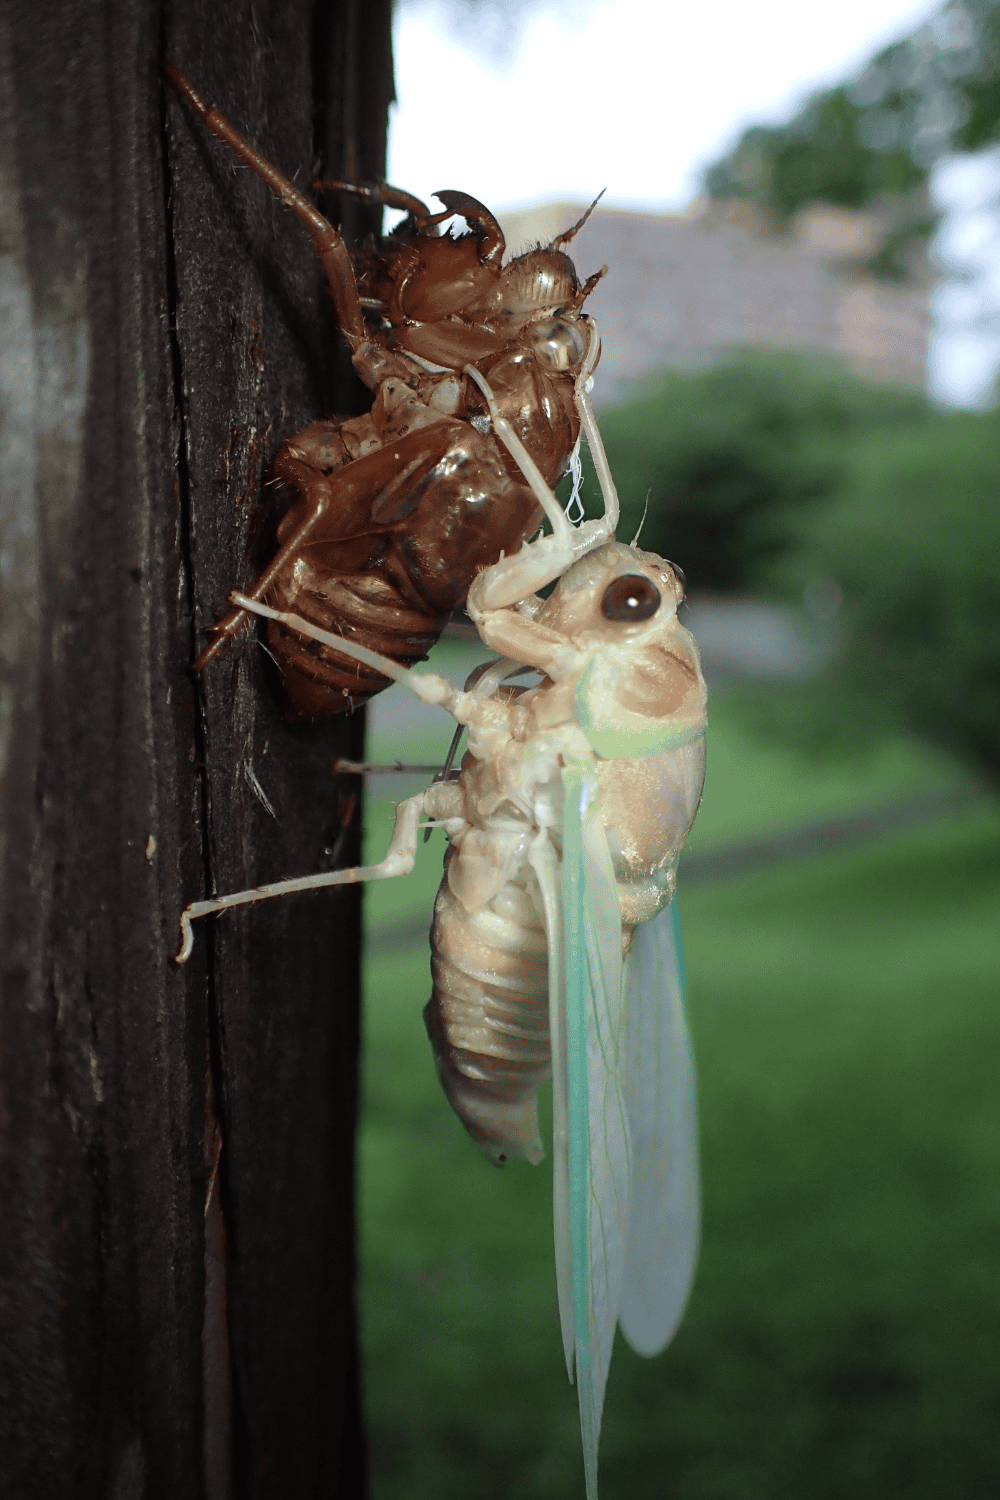 Closeup of cicada's face during emergence